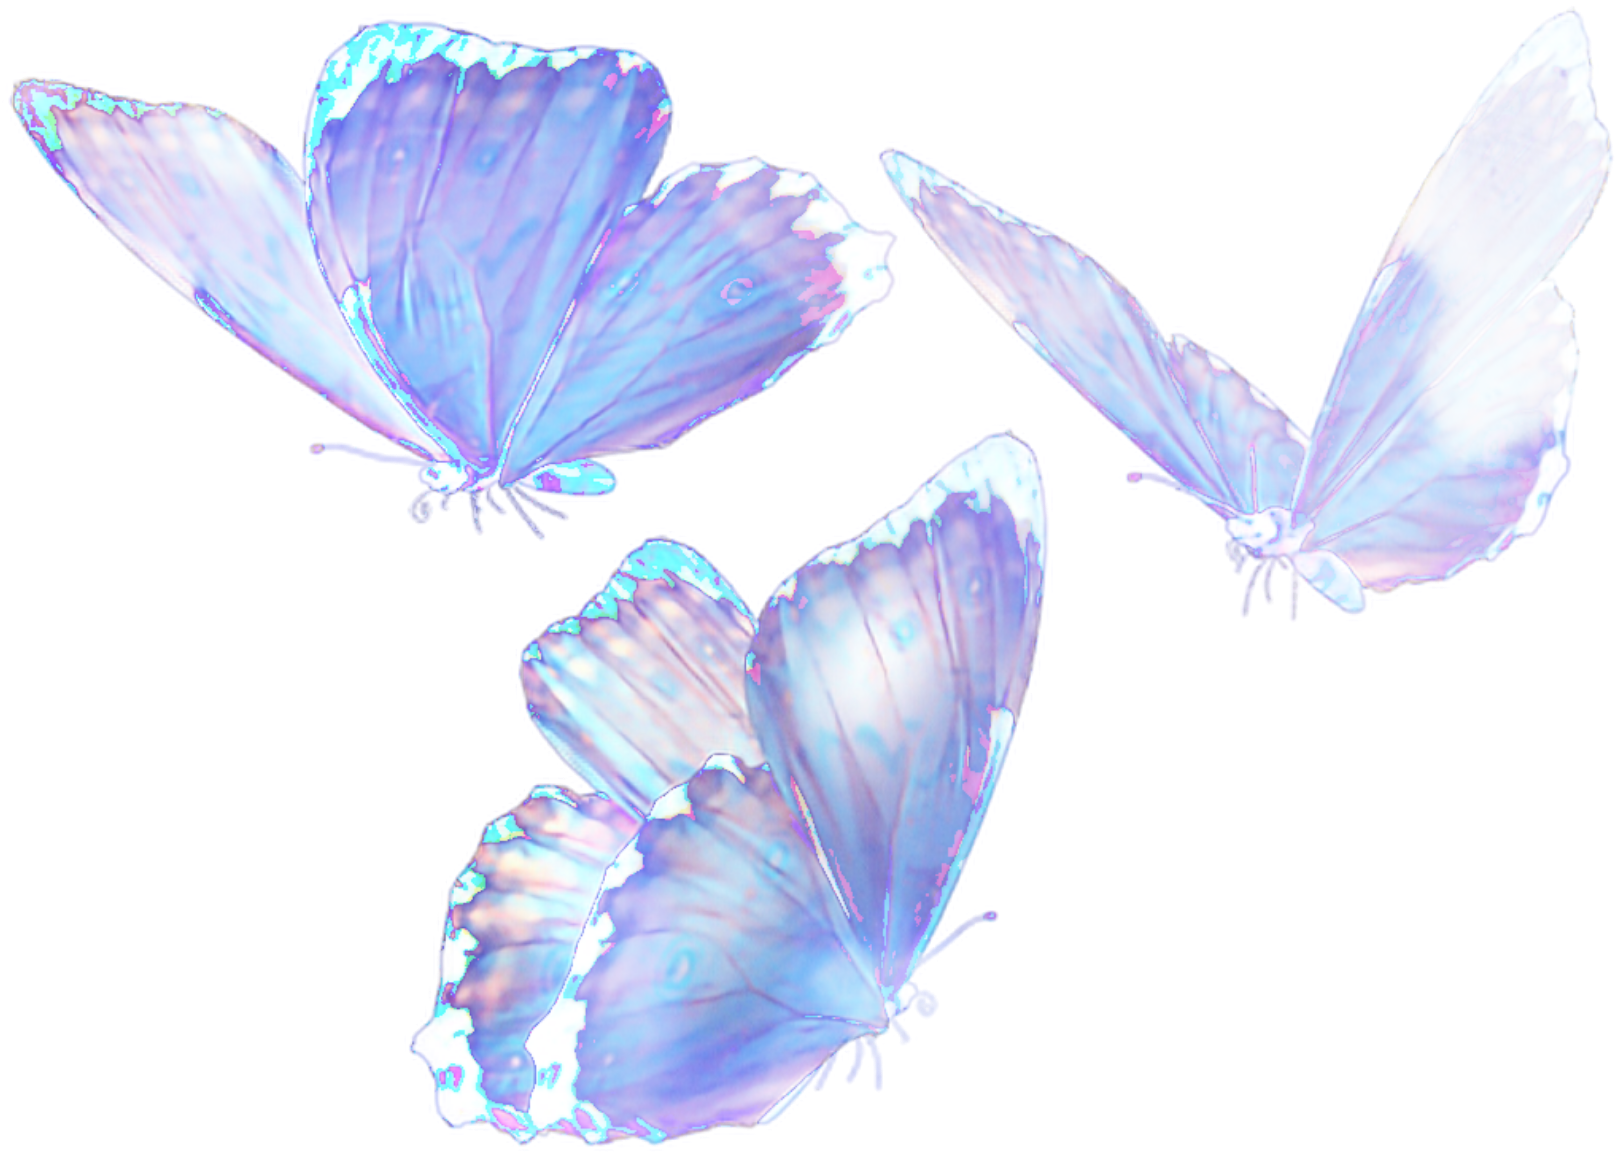 Flying Blue Butterfly